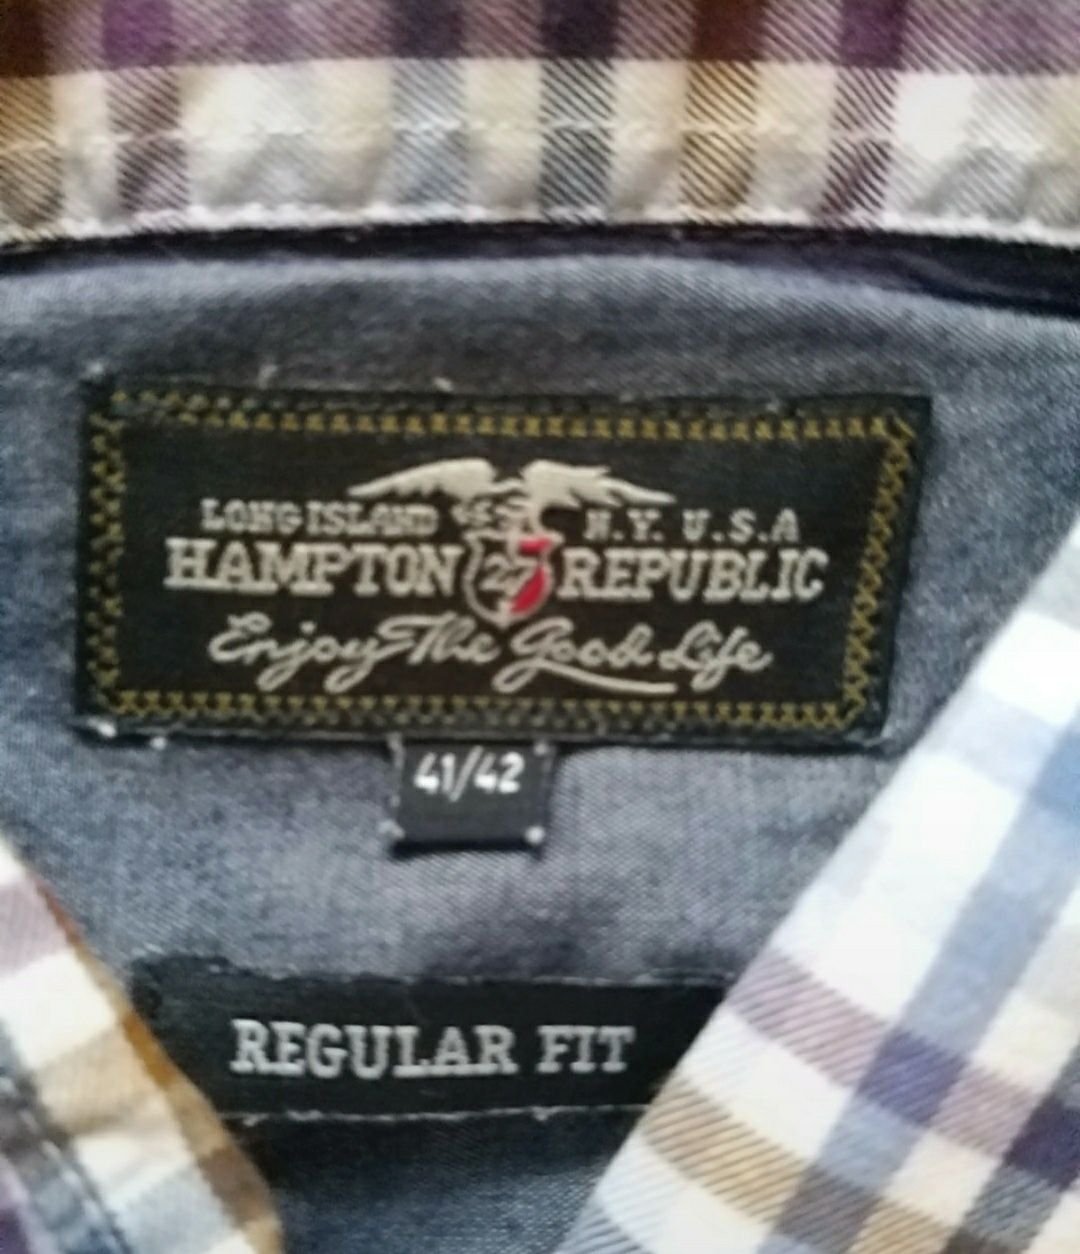 Hampton Republic Kappahl koszula męska 41/42